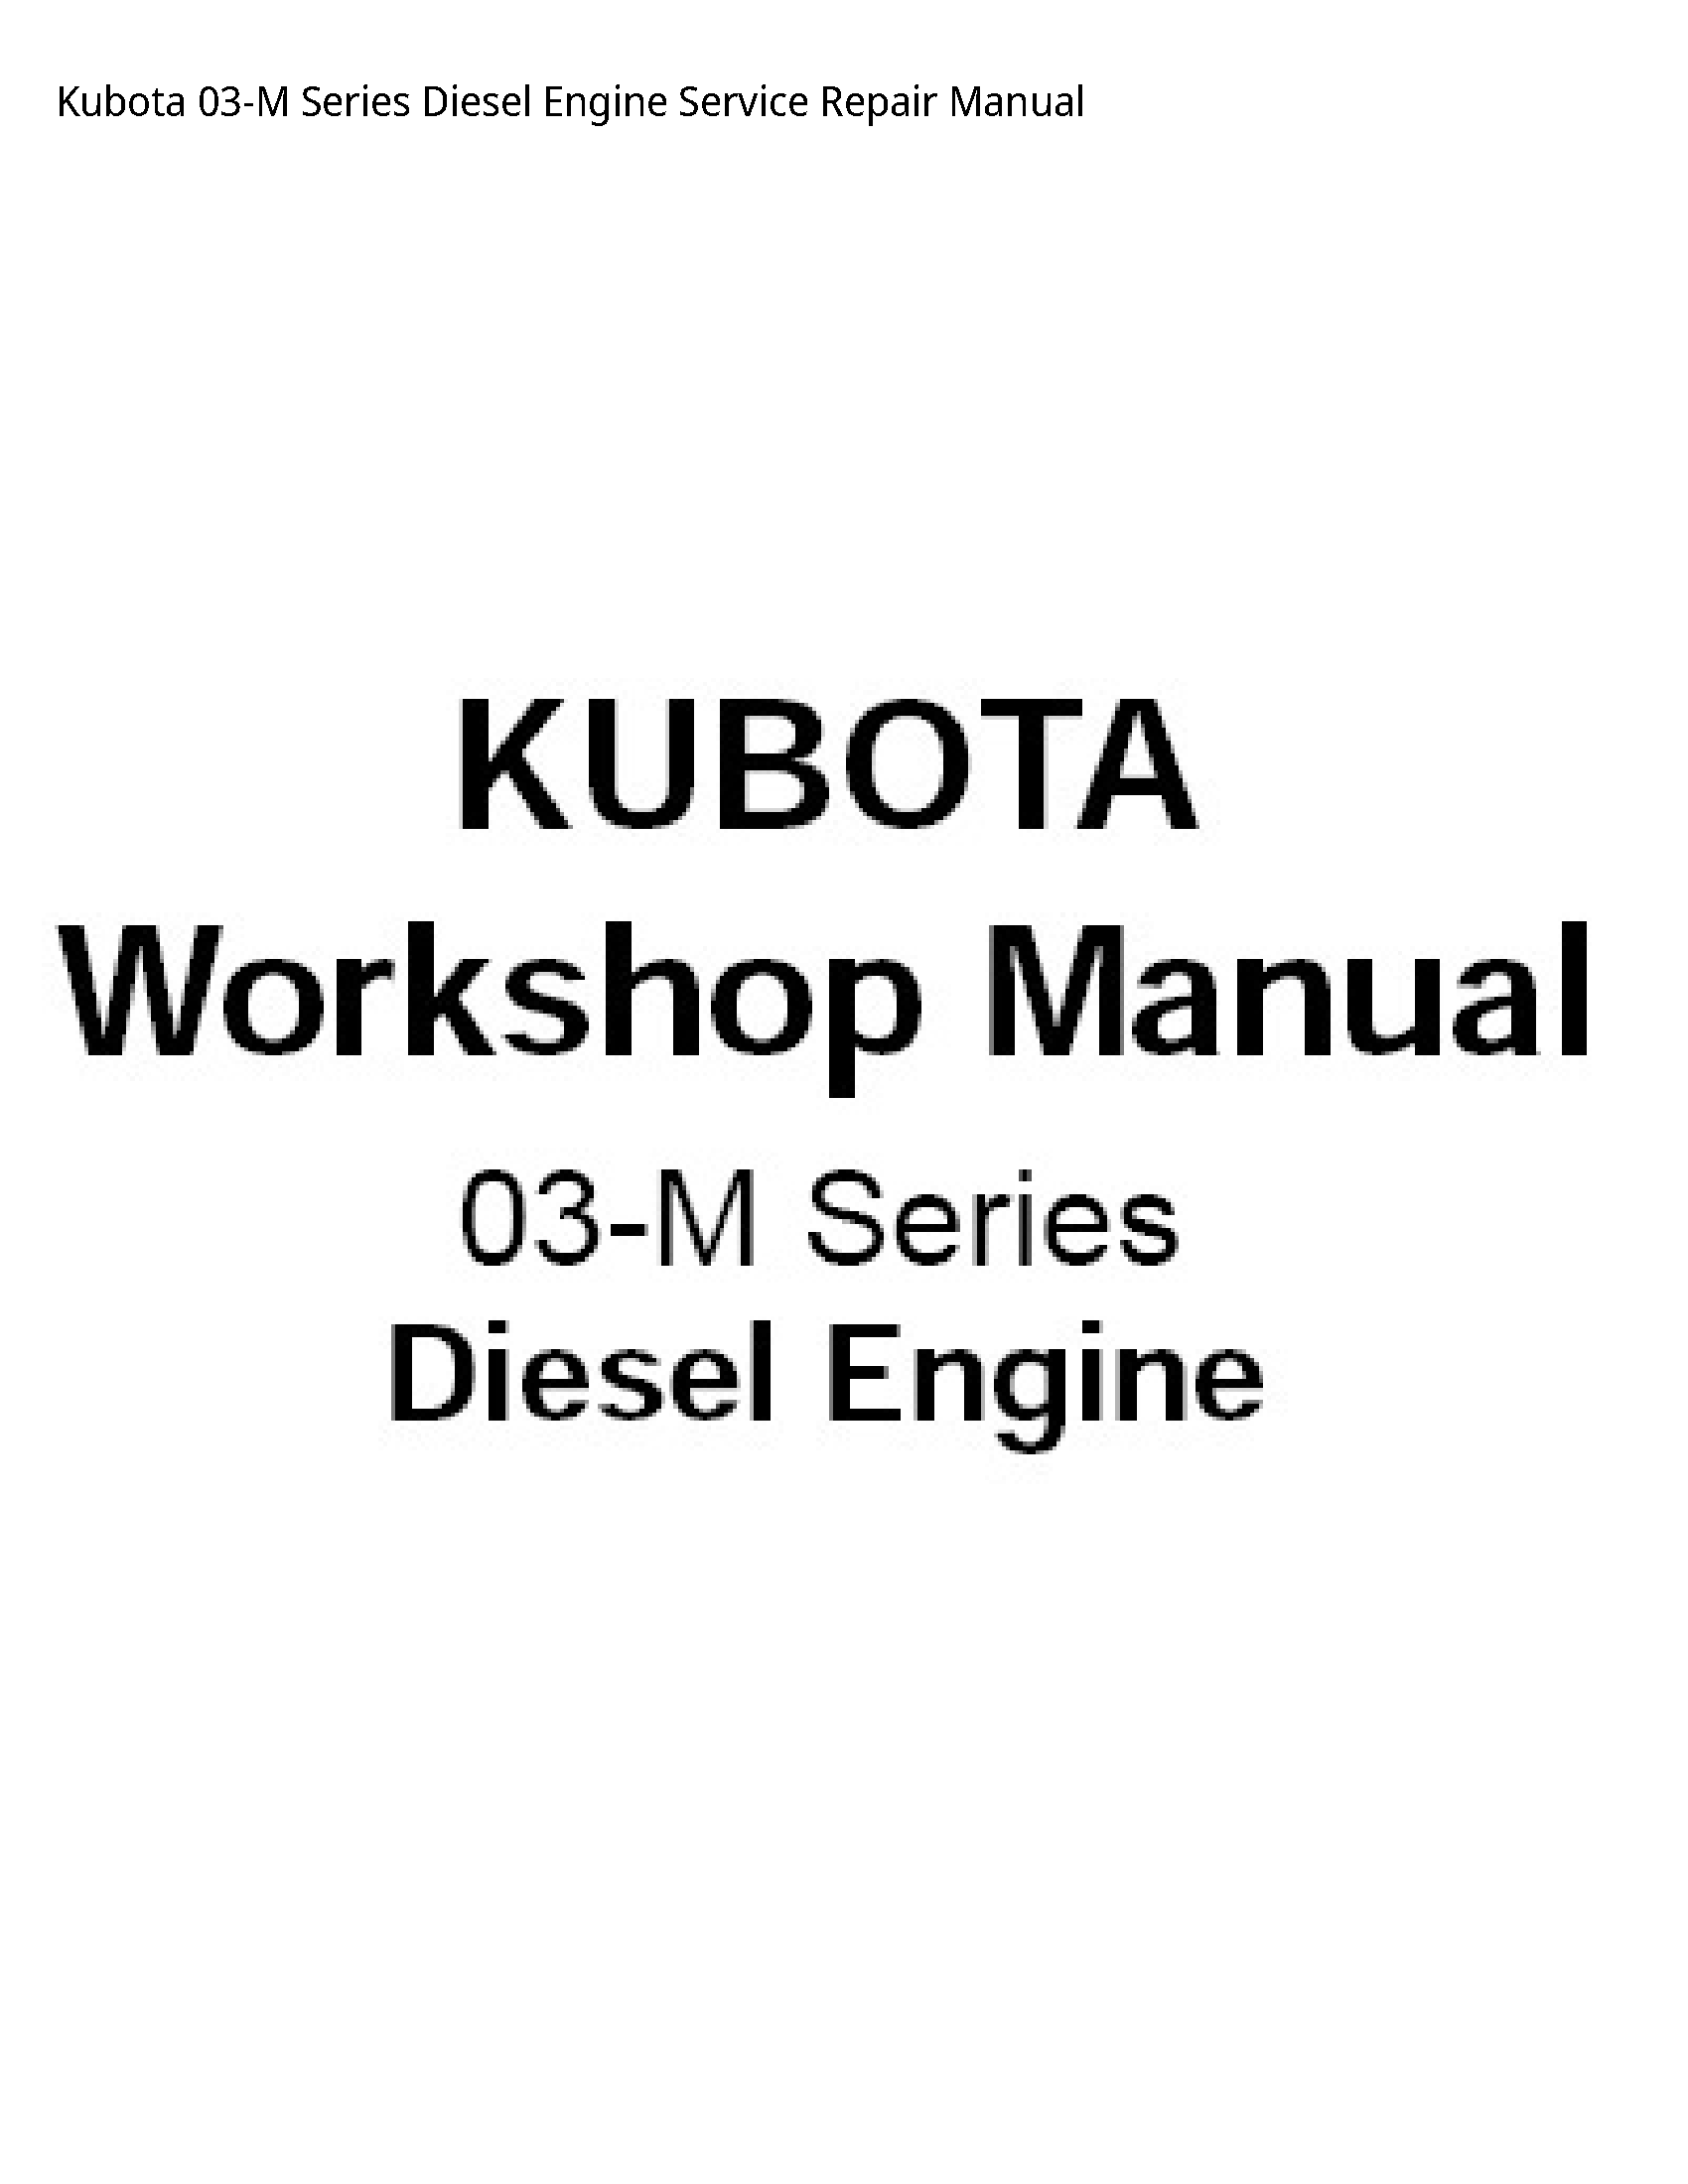 Kubota 03-M Series Diesel Engine manual